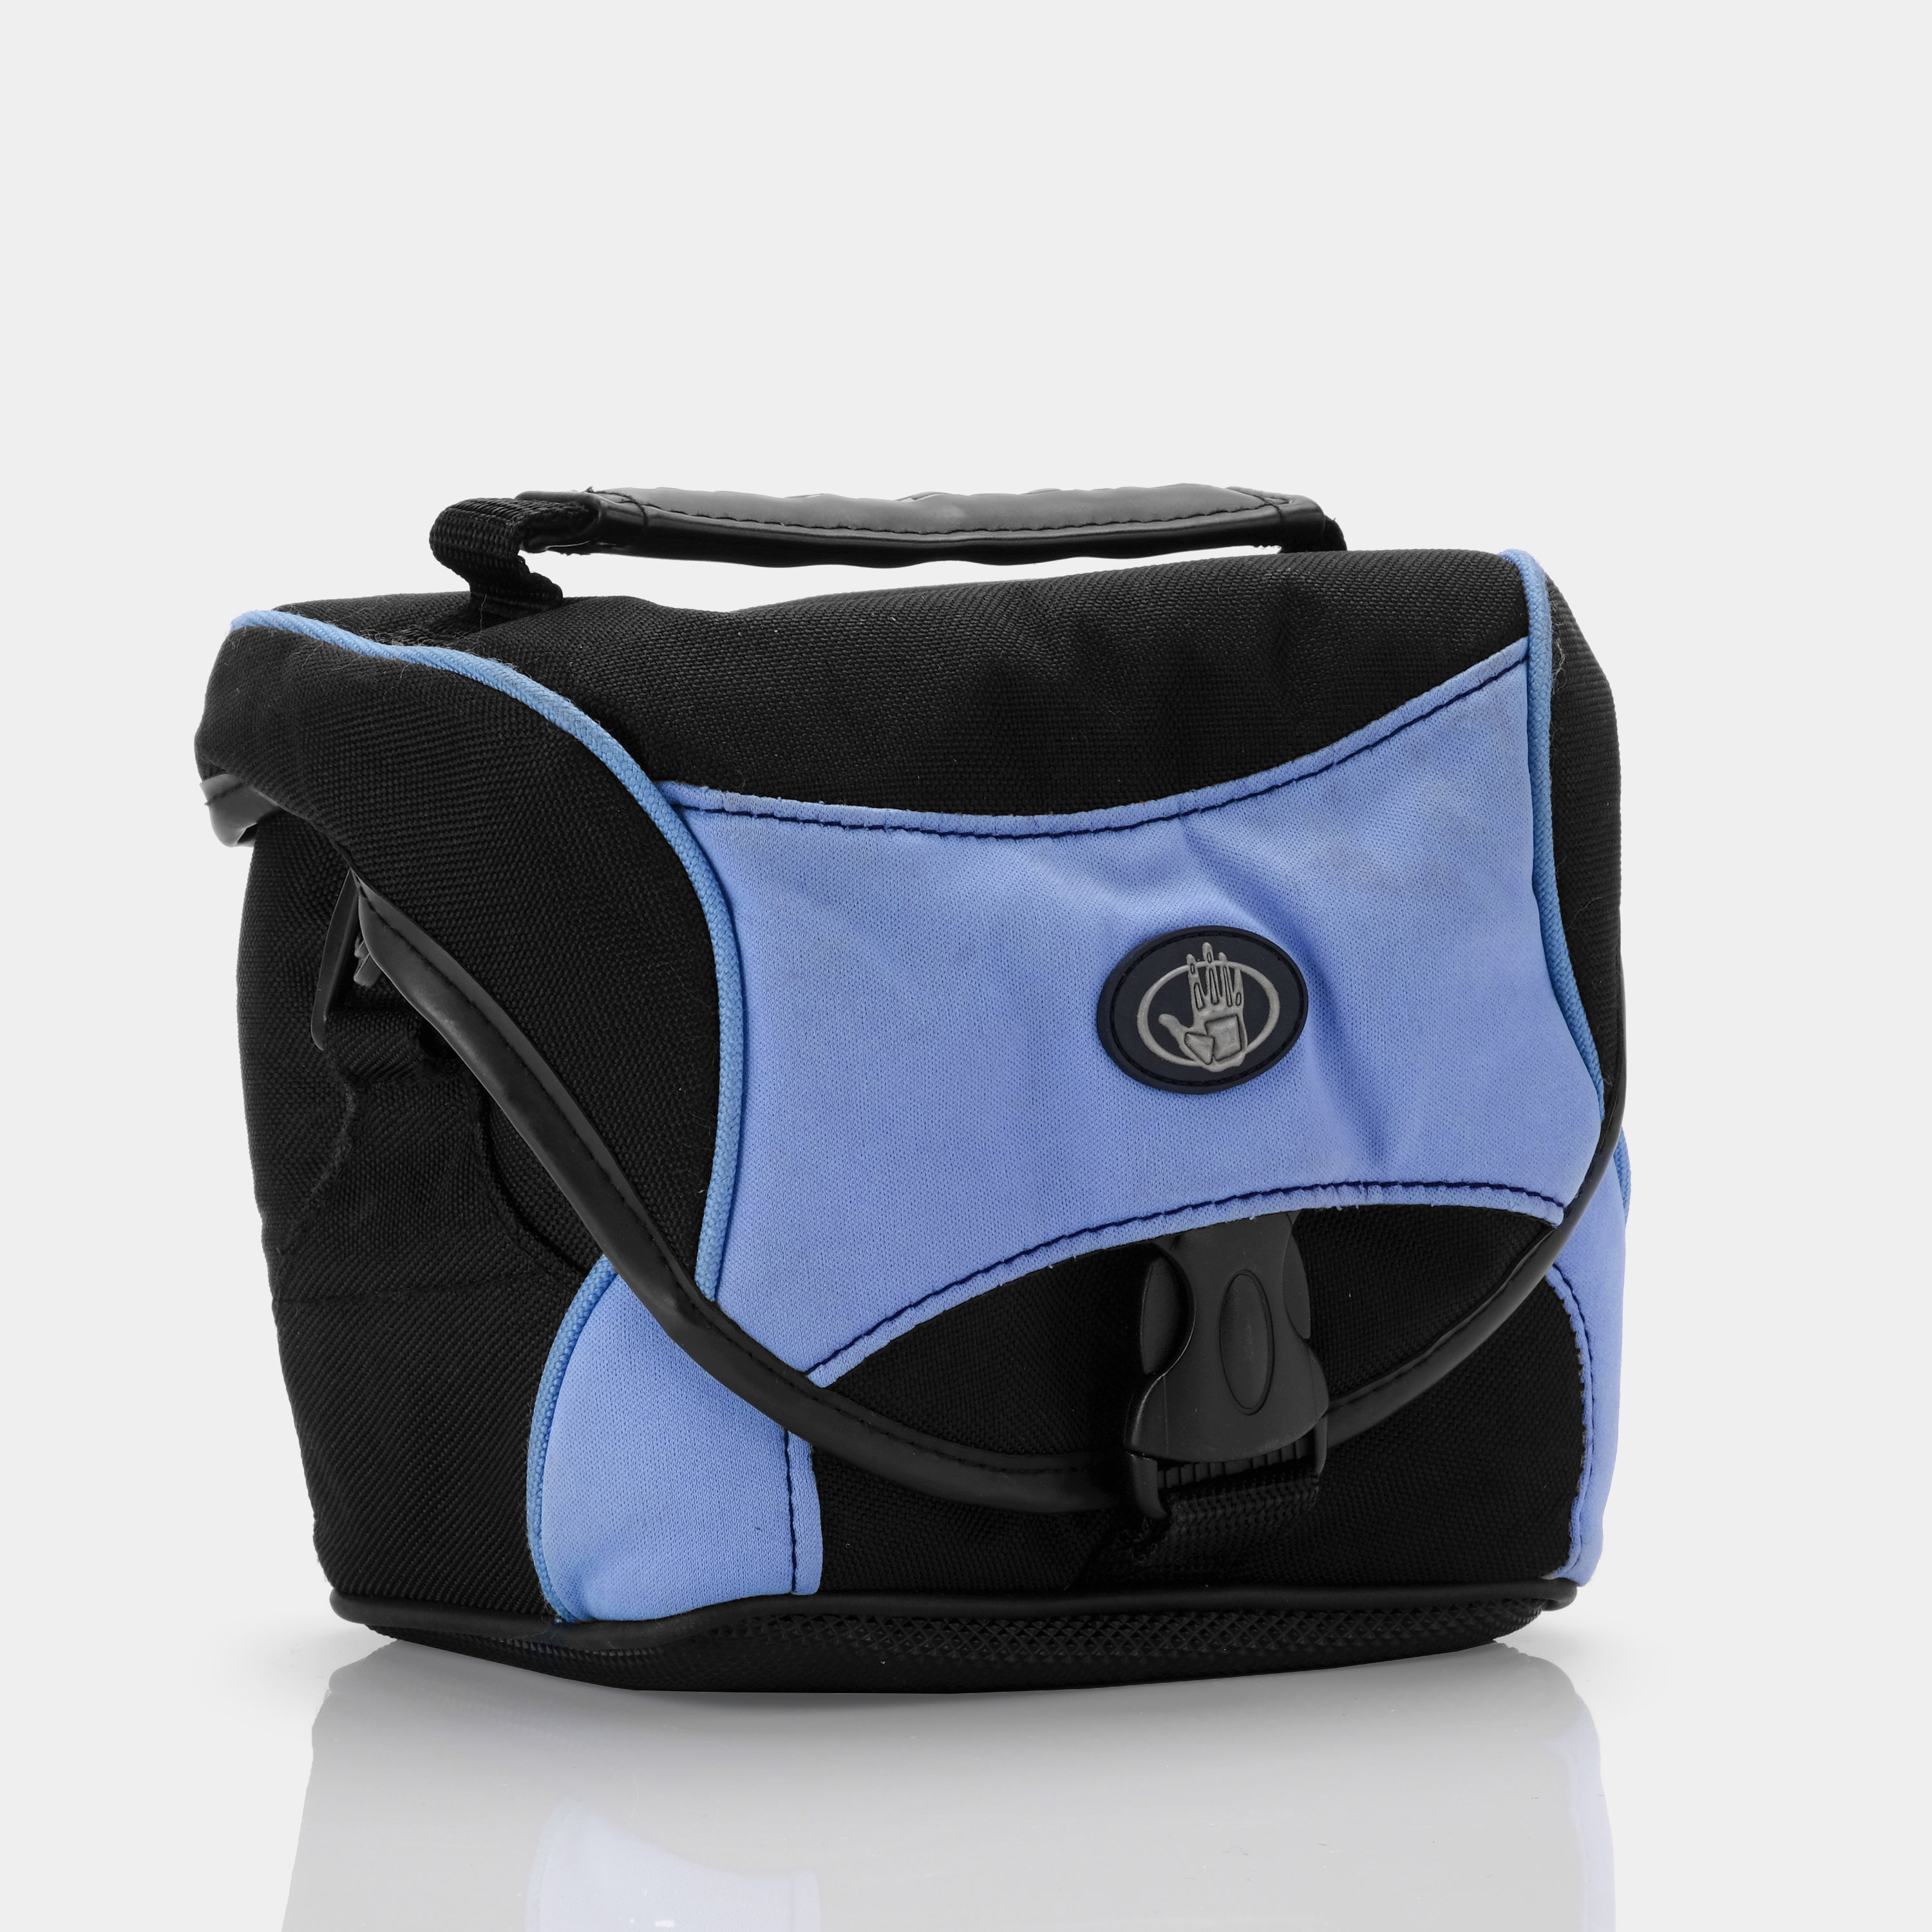 Black And Blue Body Glove Camera Bag